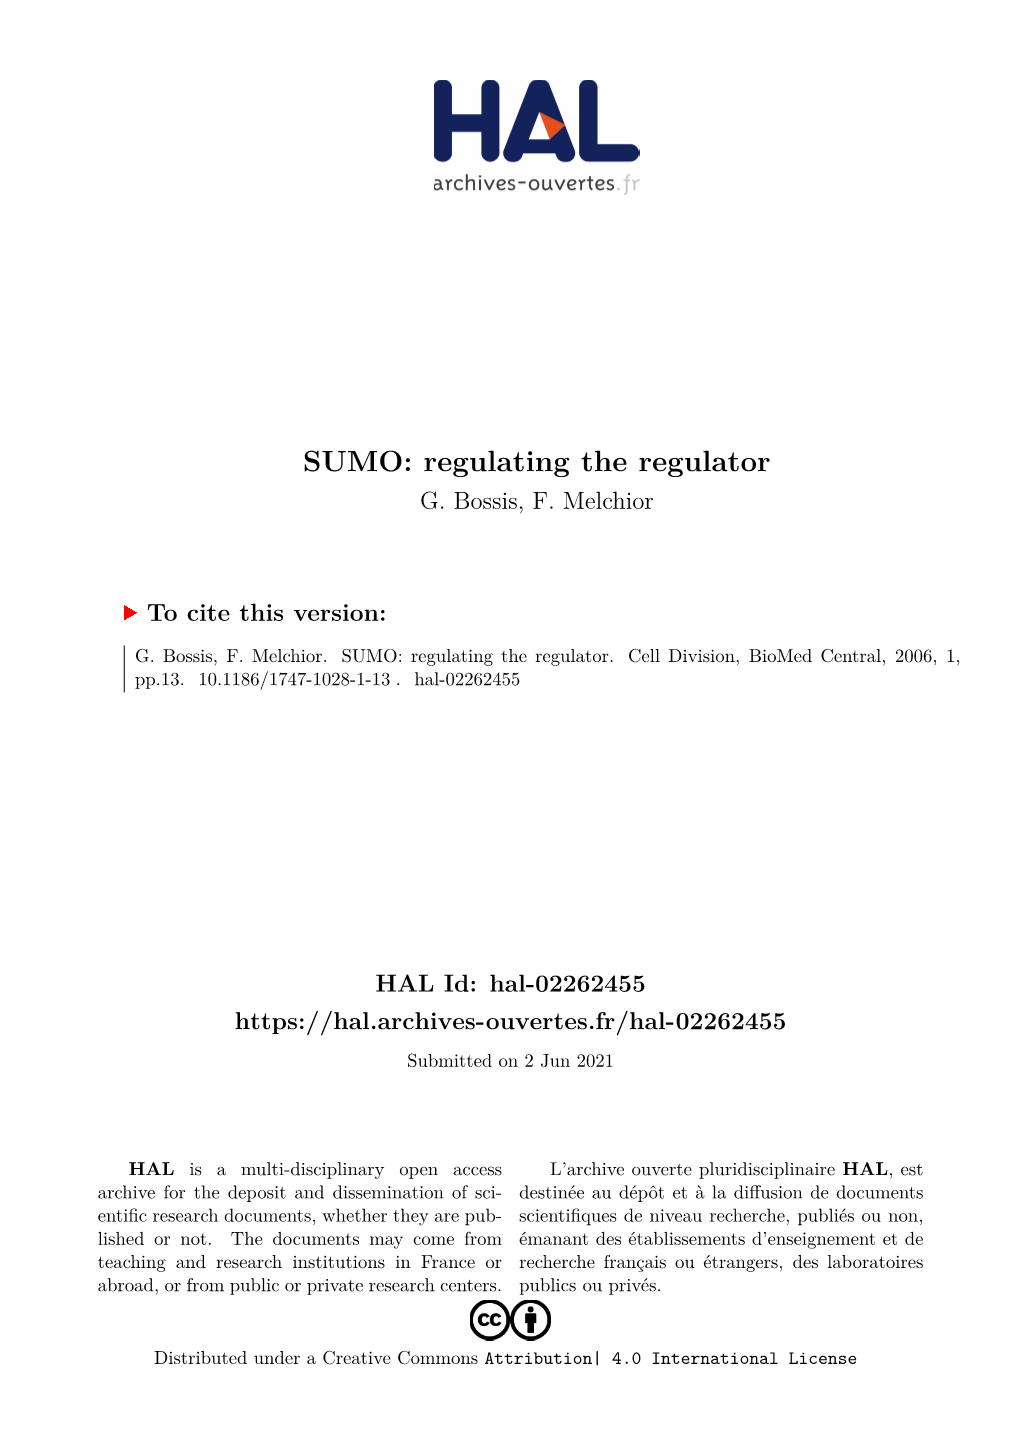 SUMO: Regulating the Regulator G